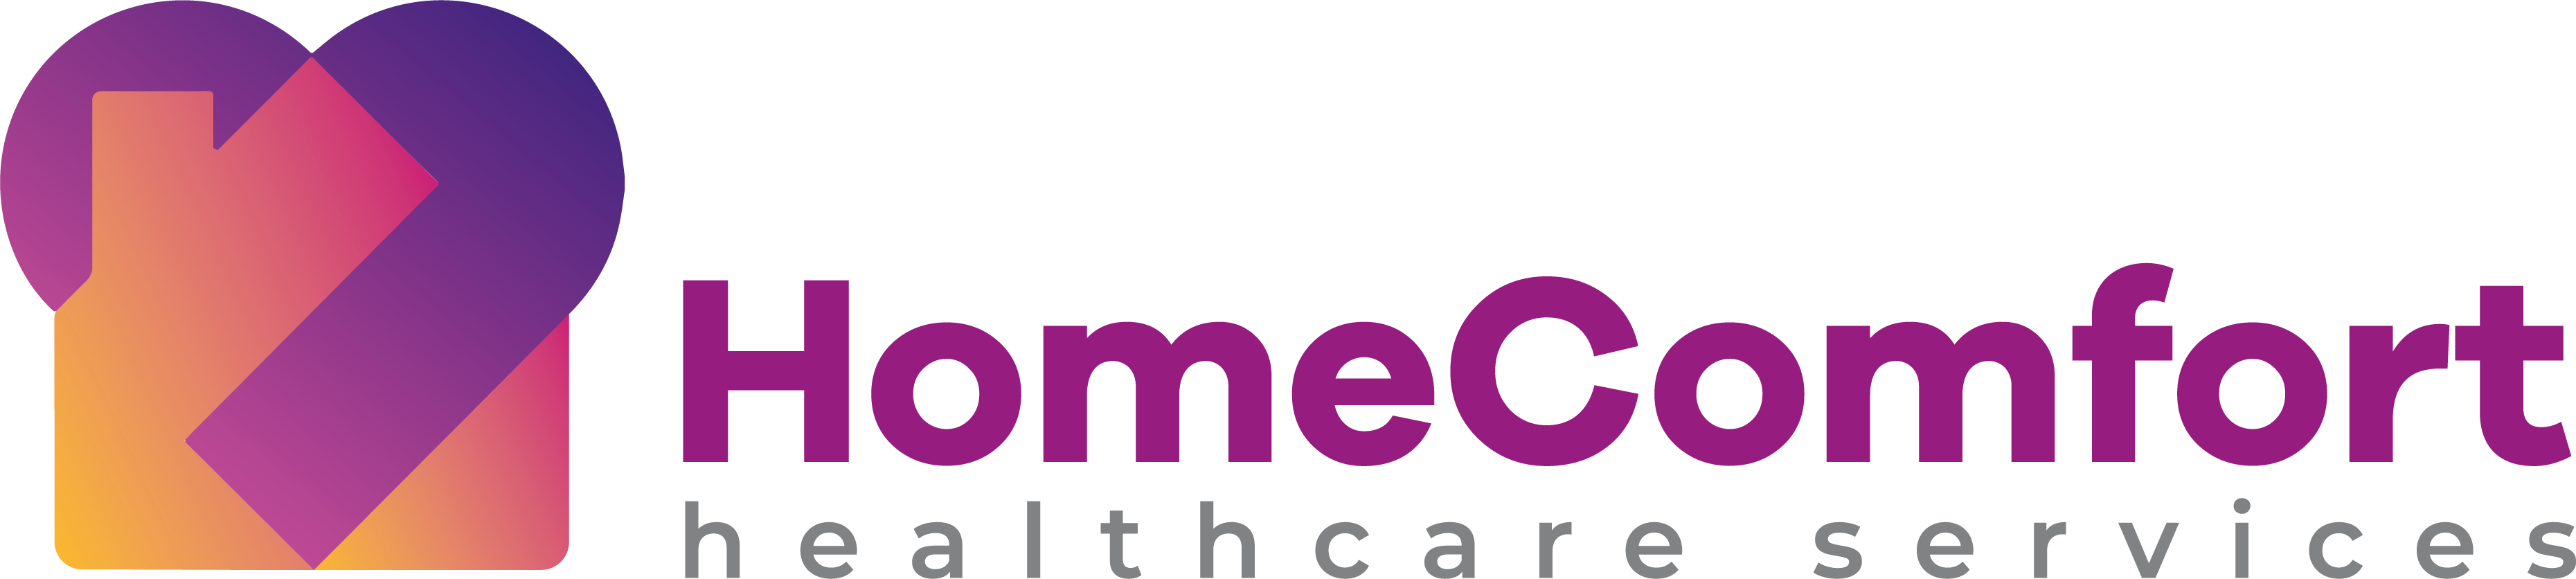 home care health services edmonton homecomfort favicon